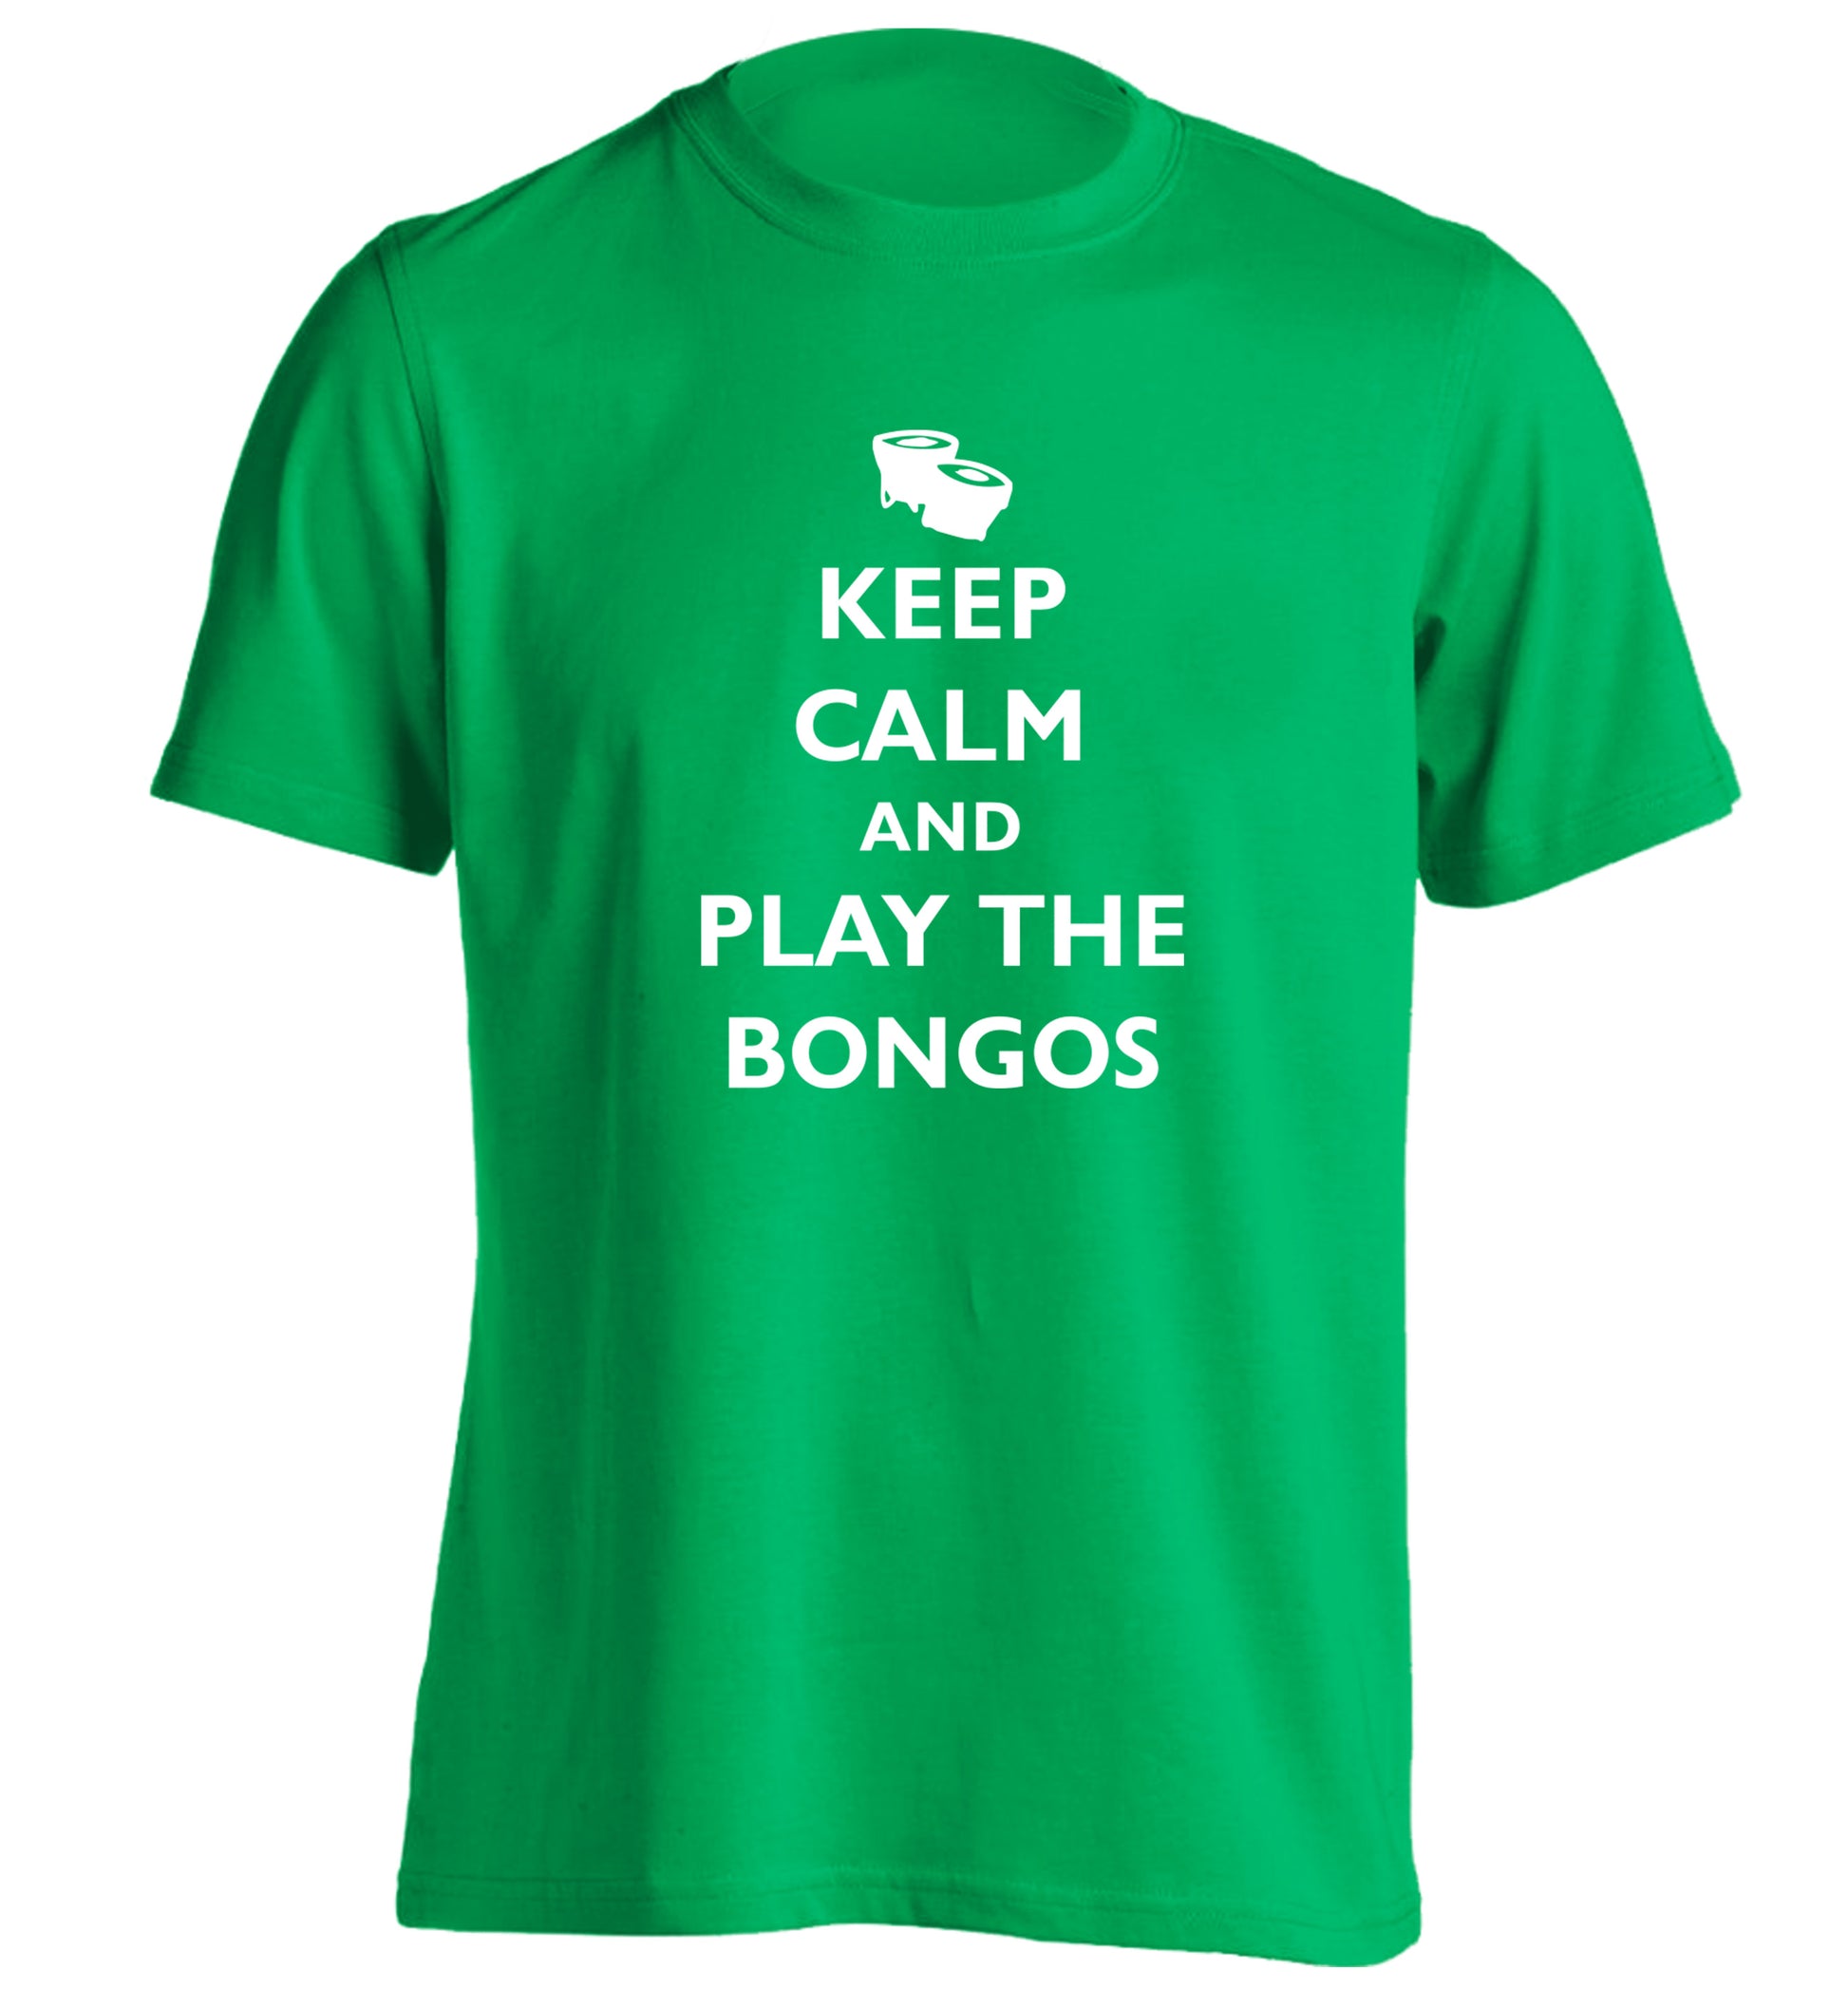 Keep calm and play the bongos adults unisex green Tshirt 2XL